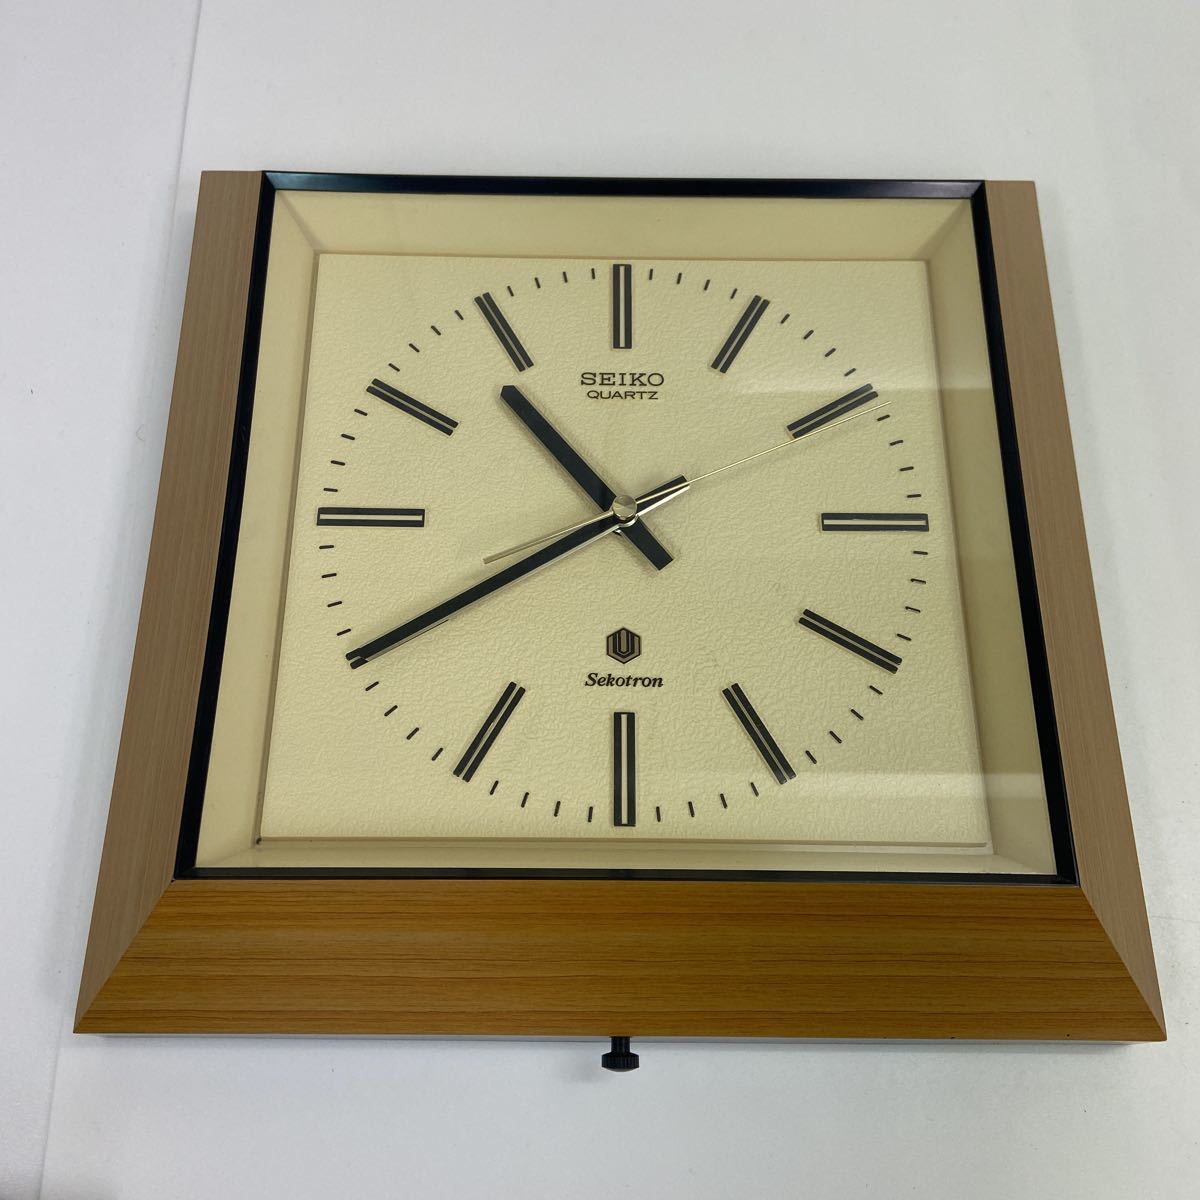 A1 セイコー SEIKO クオーツ 掛け時計 sekotron セコトロン ビンテージ 壁掛け時計 掛時計 昭和レトロ 動作確認済み